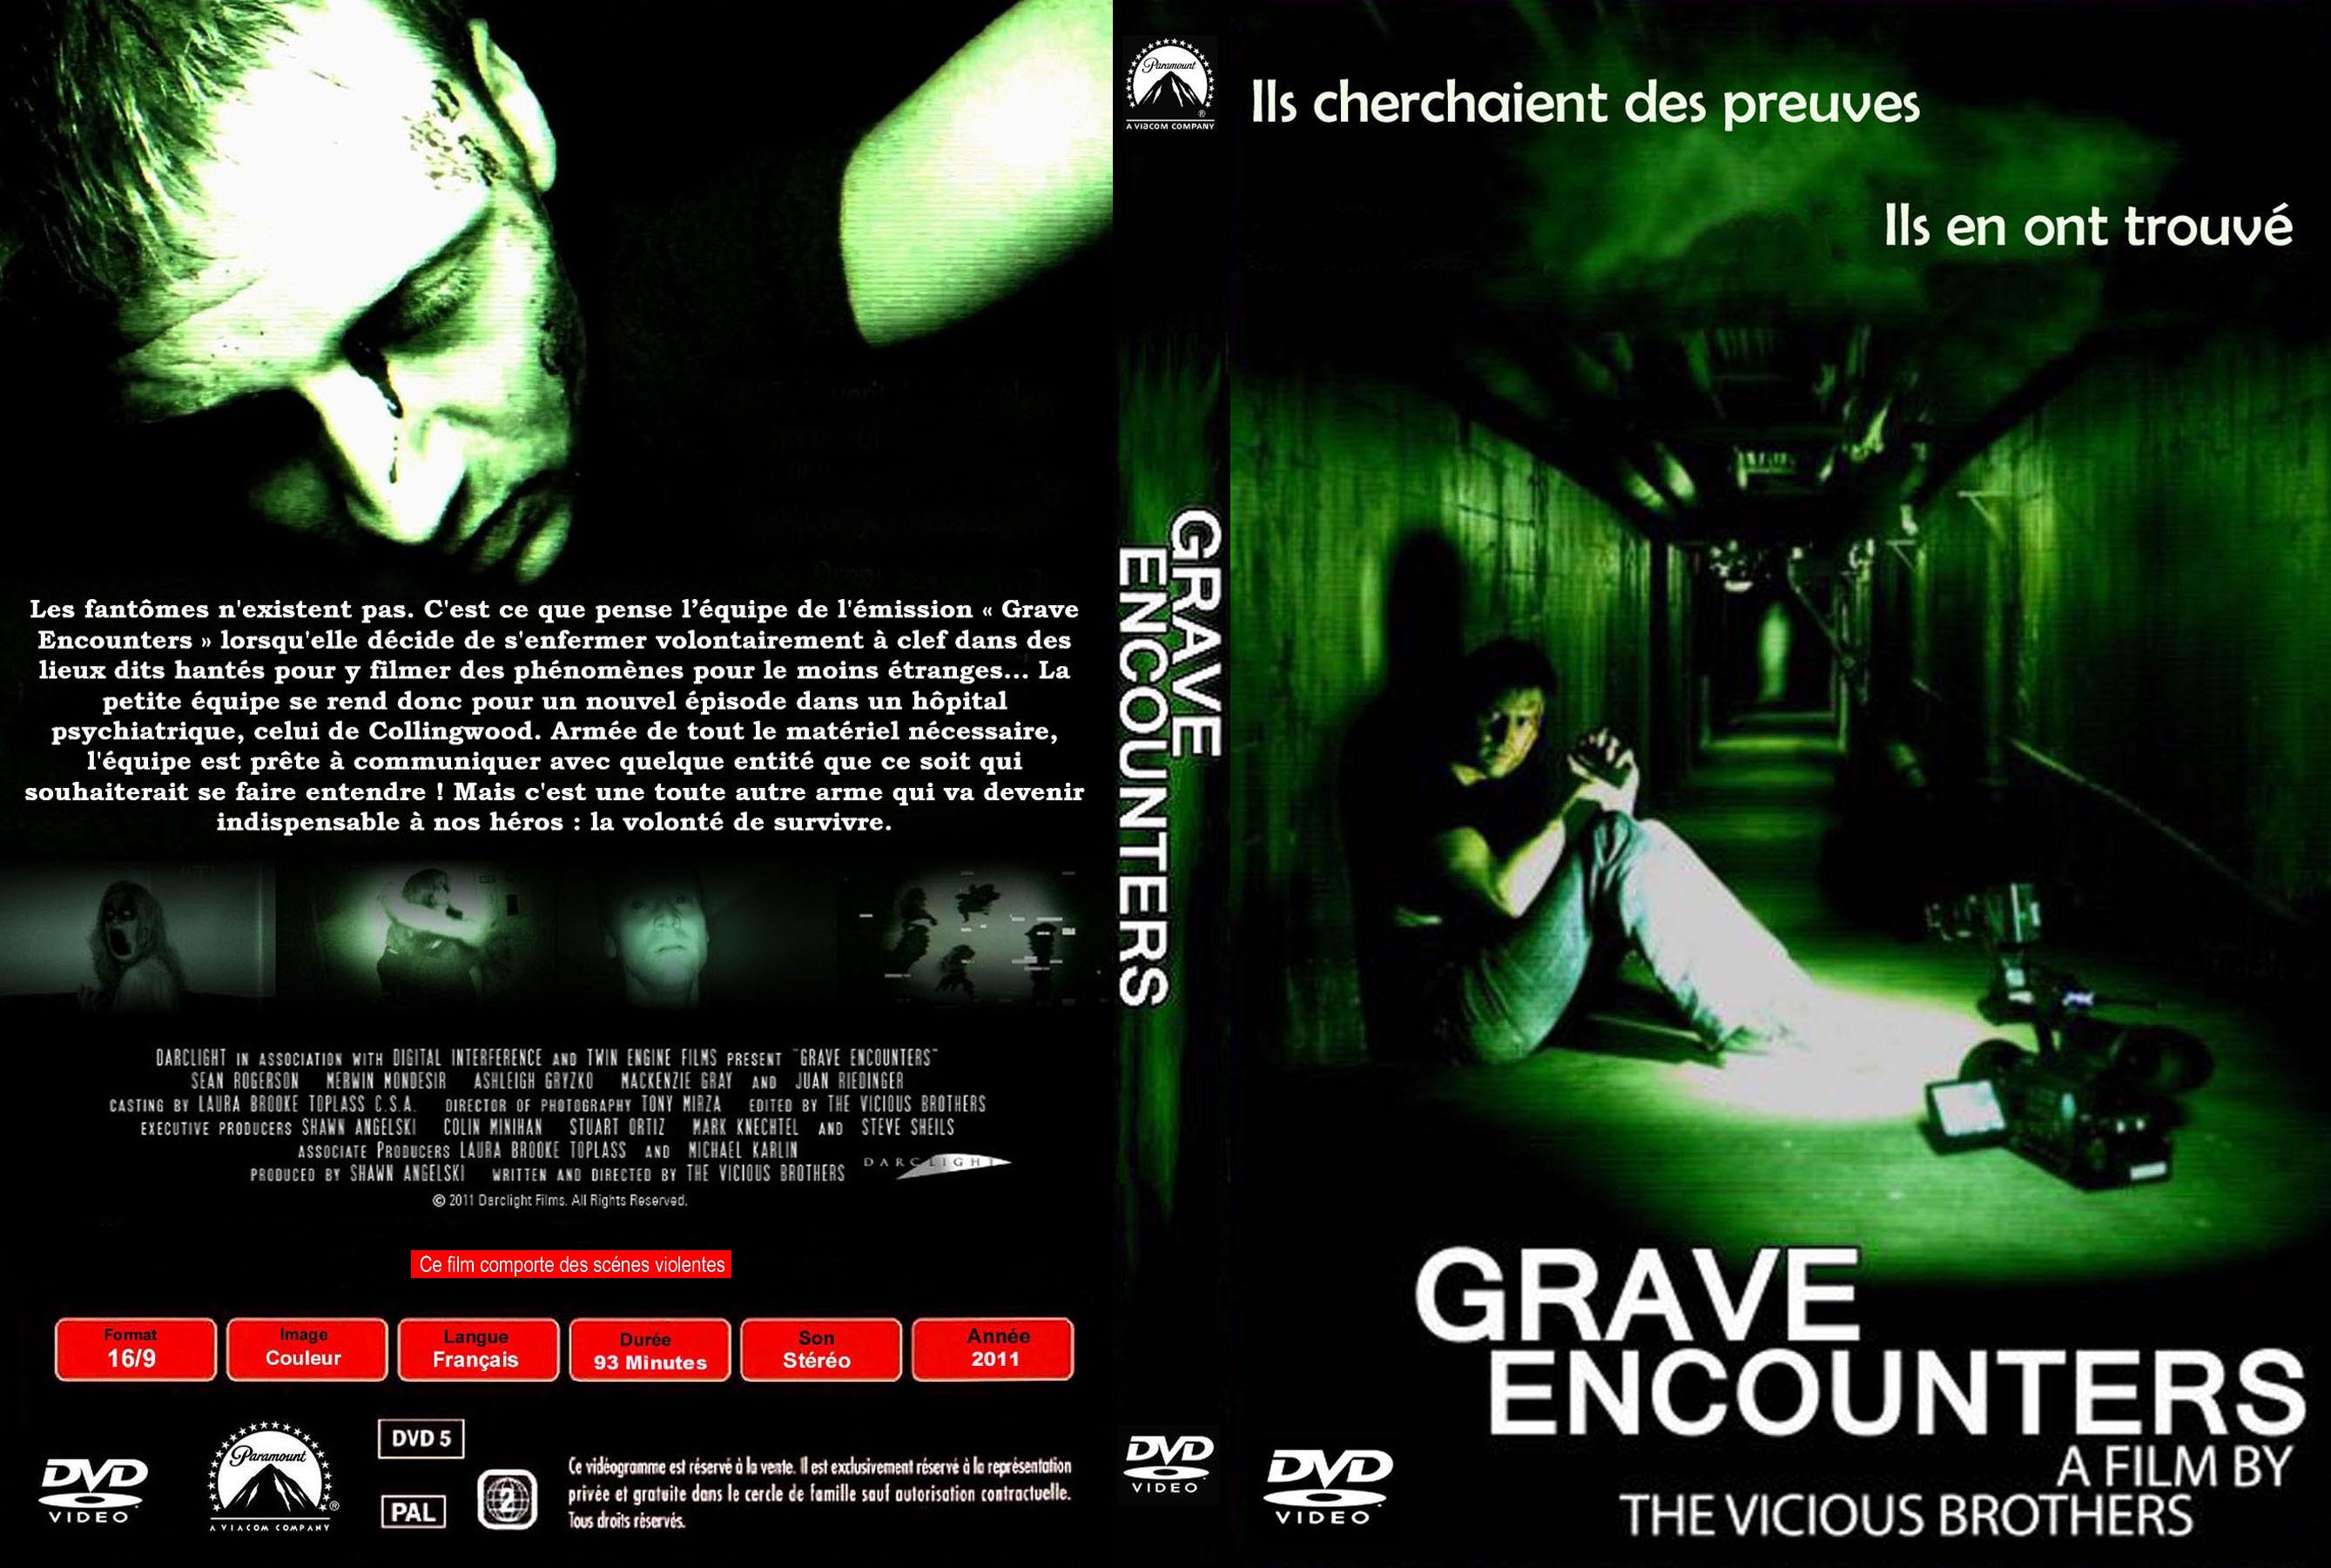 Jaquette DVD Grave encounters custom v2